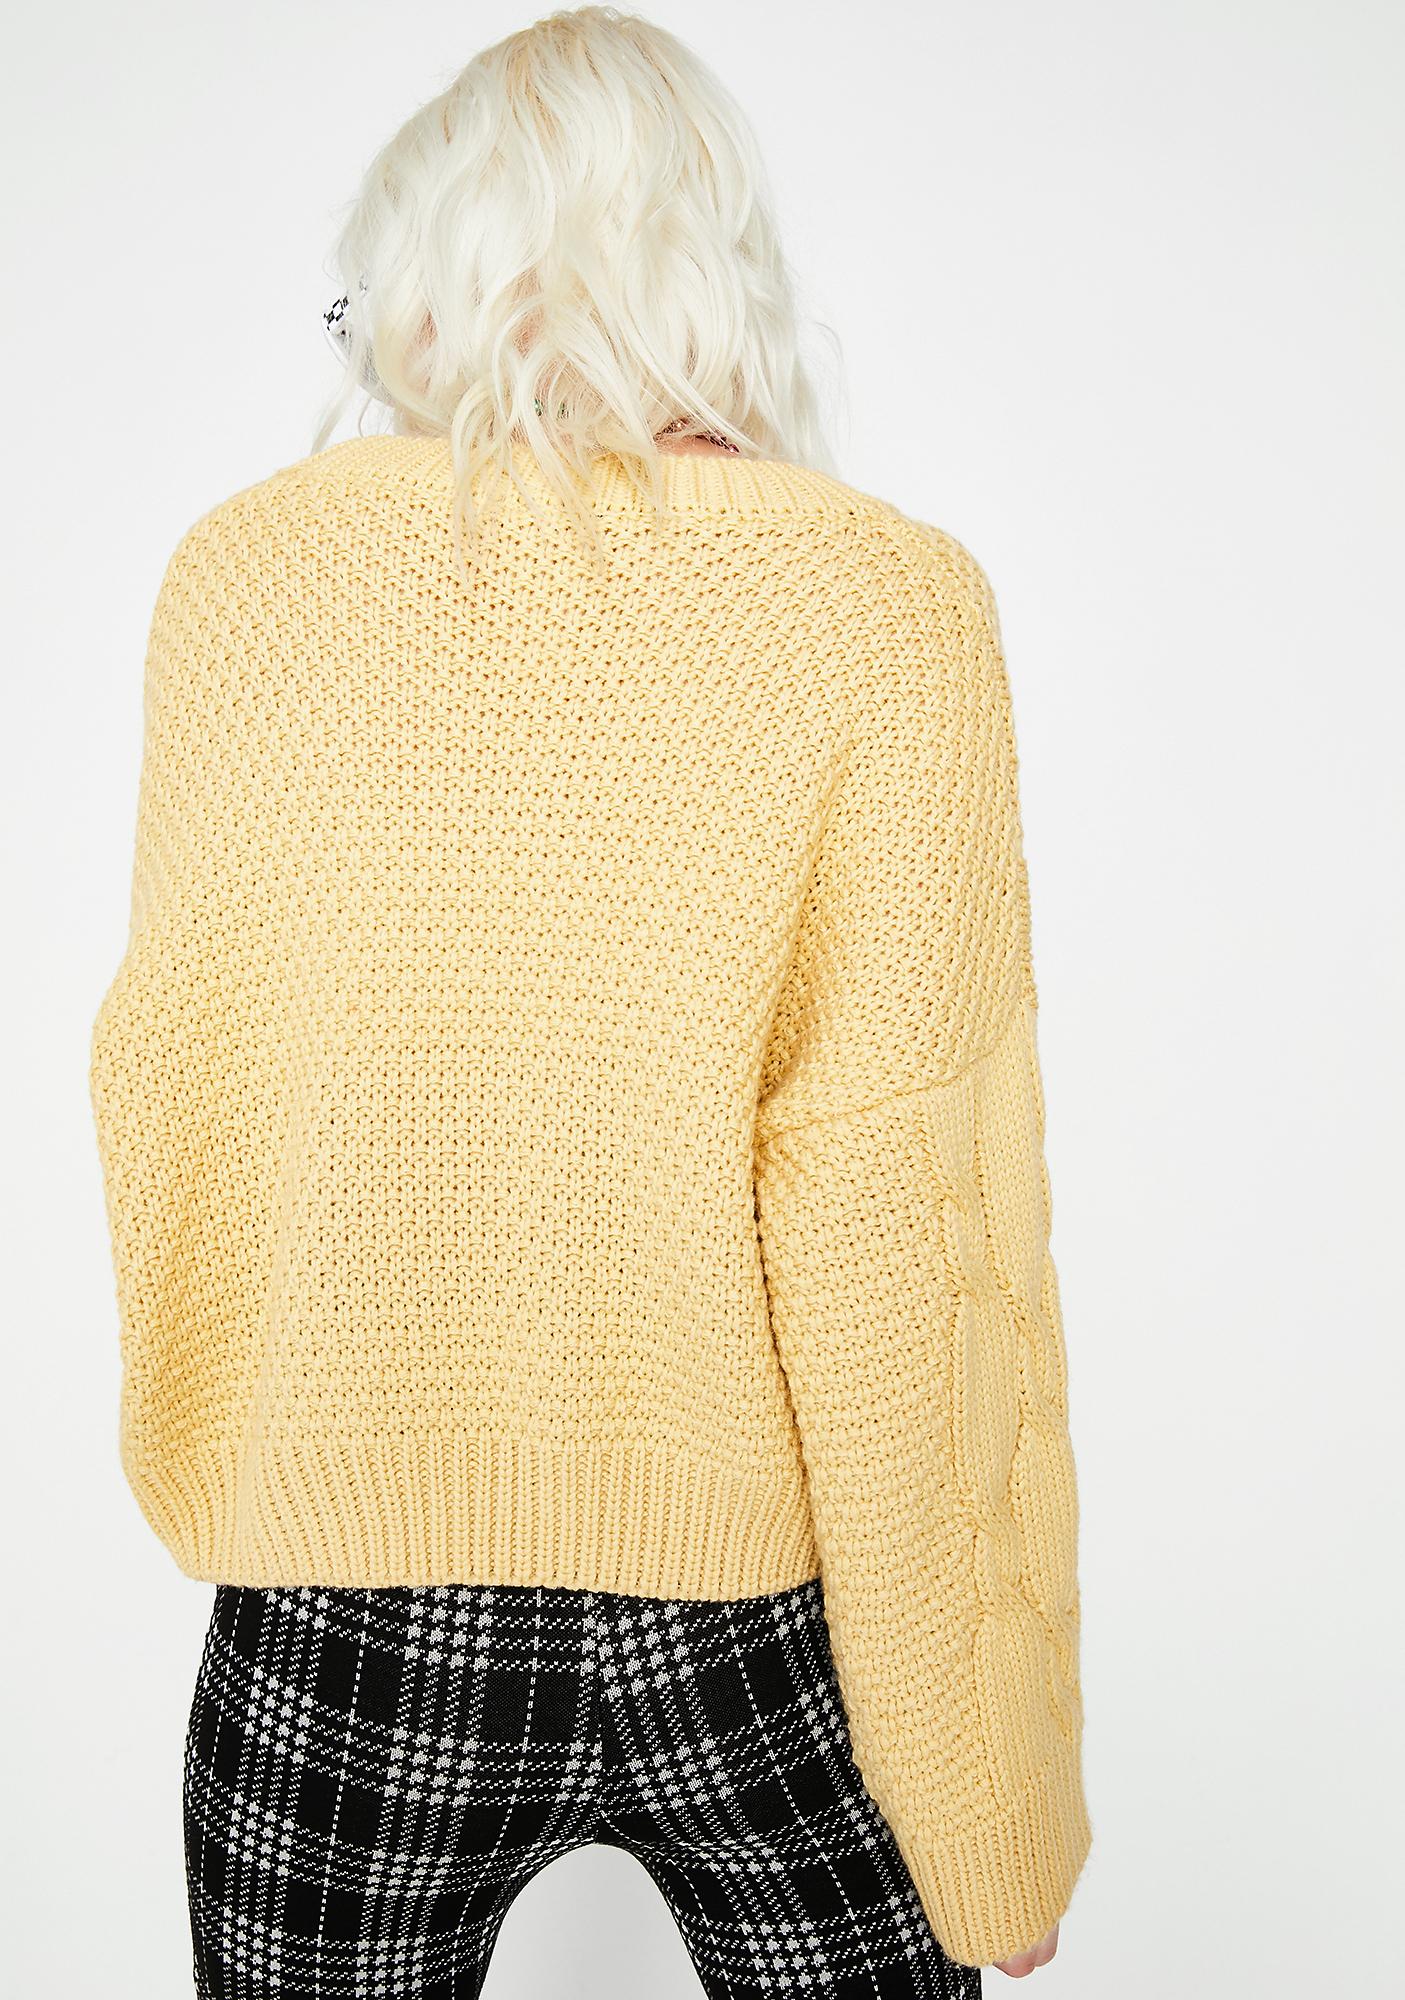 Cableknit Yellow Sweater | Dolls Kill